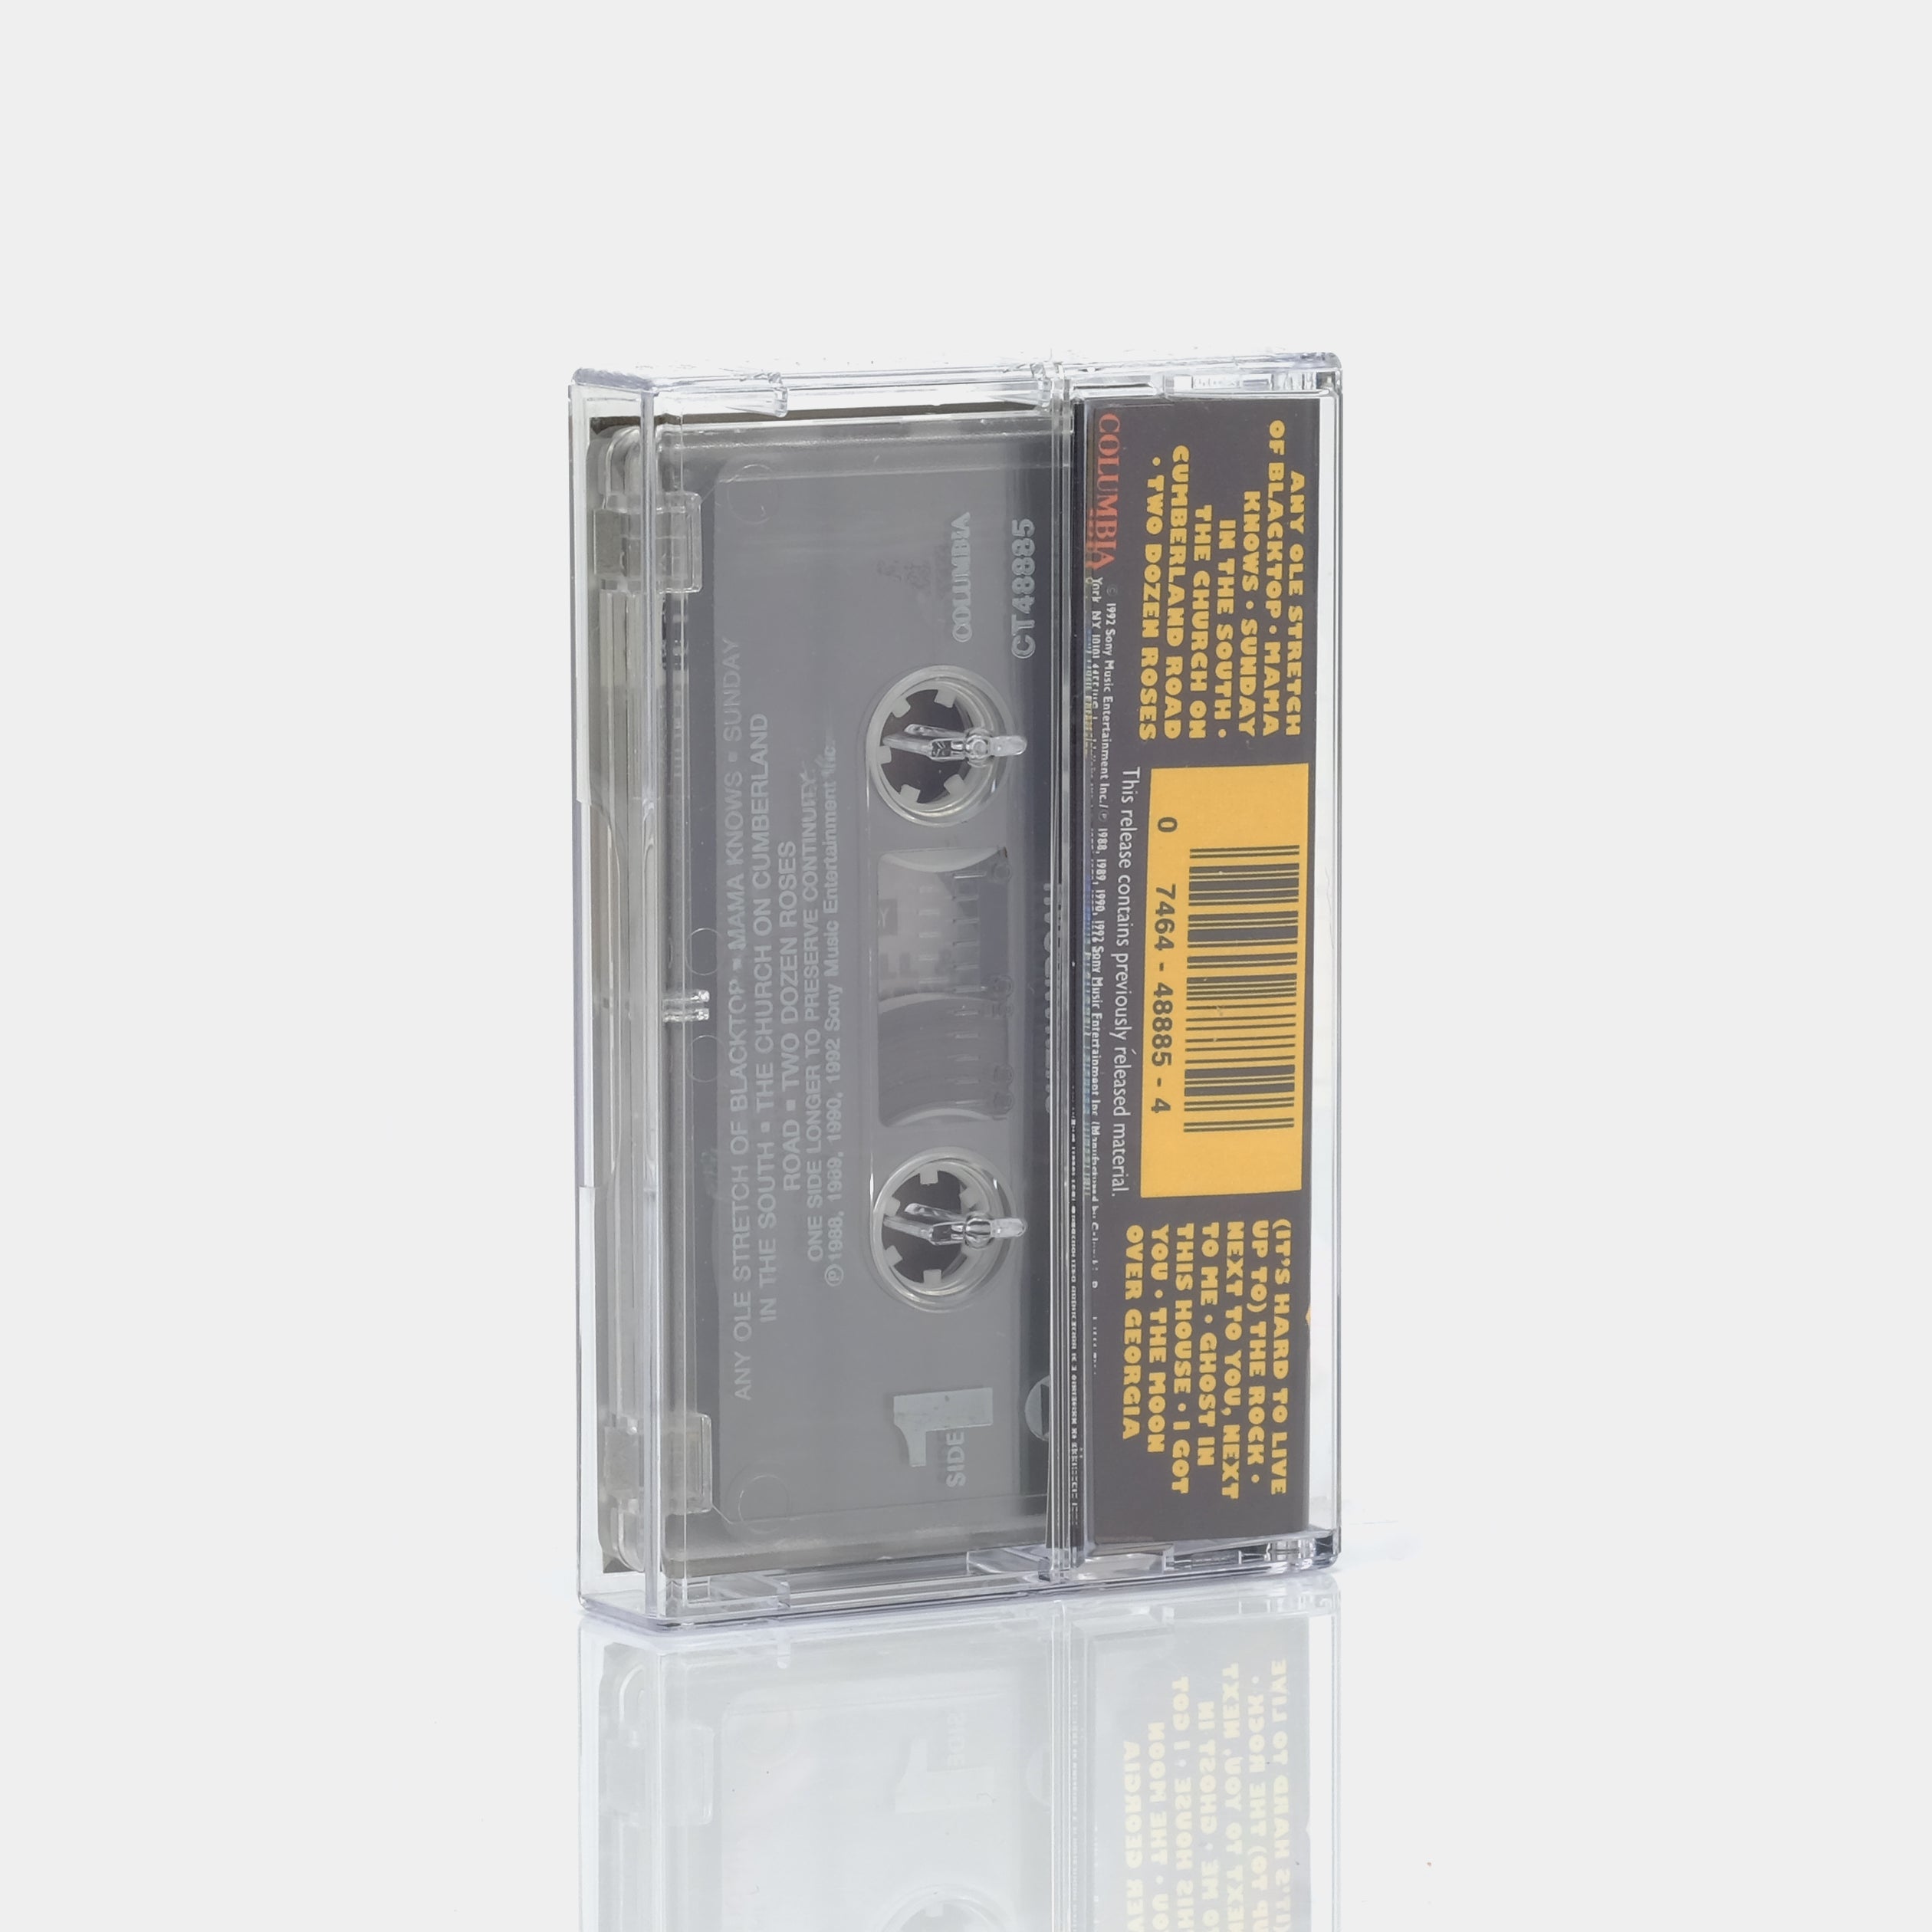 Shenandoah - Greatest Hits Cassette Tape